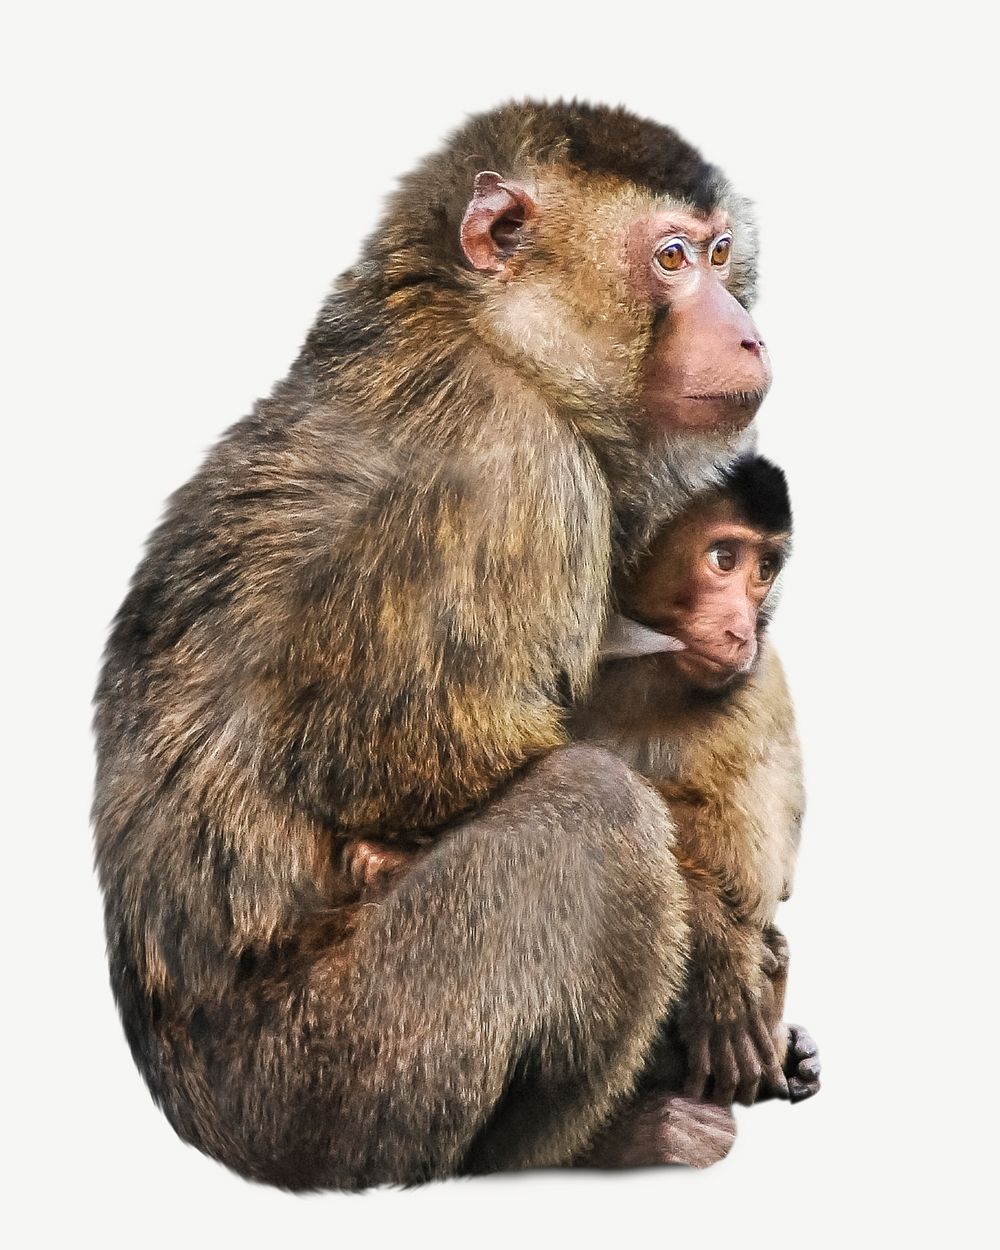 Breastfeeding monkey collage element psd 